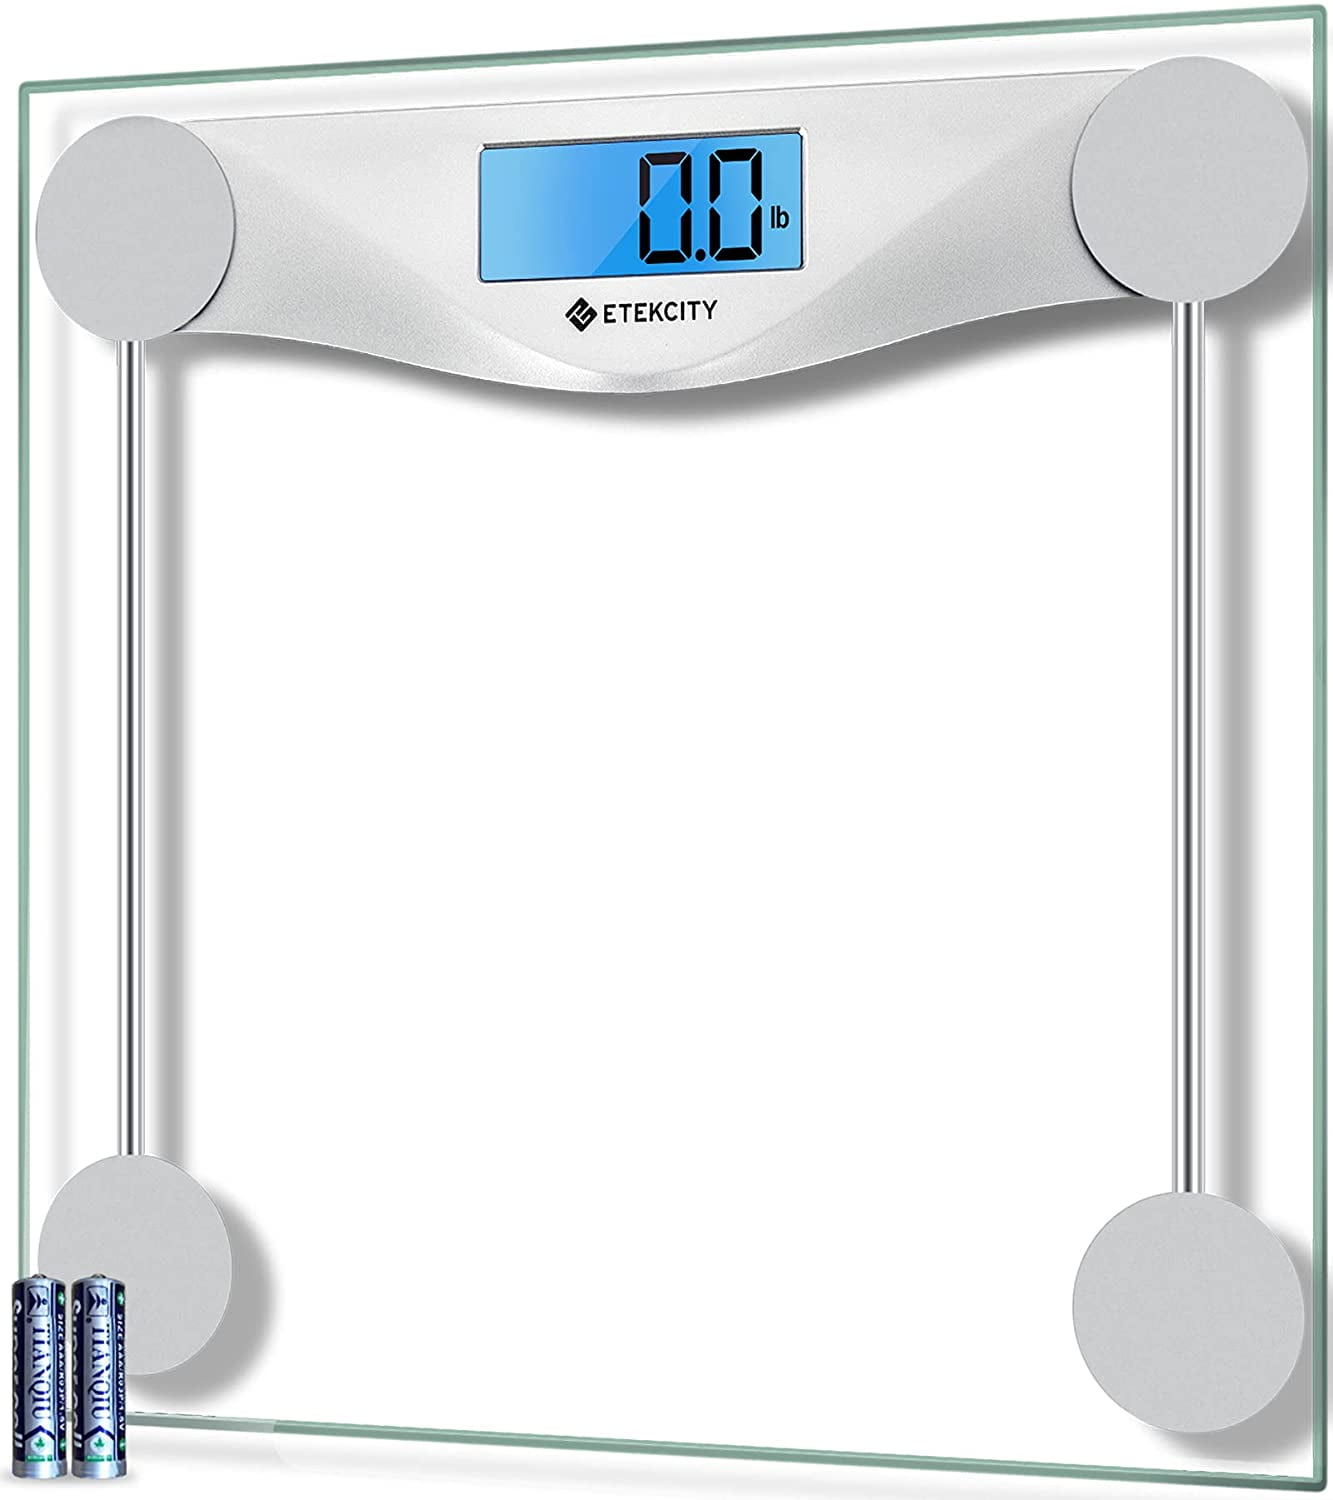 Etekcity Digital Body Weight Scale - EB4410B for Sale in San Diego, CA -  OfferUp